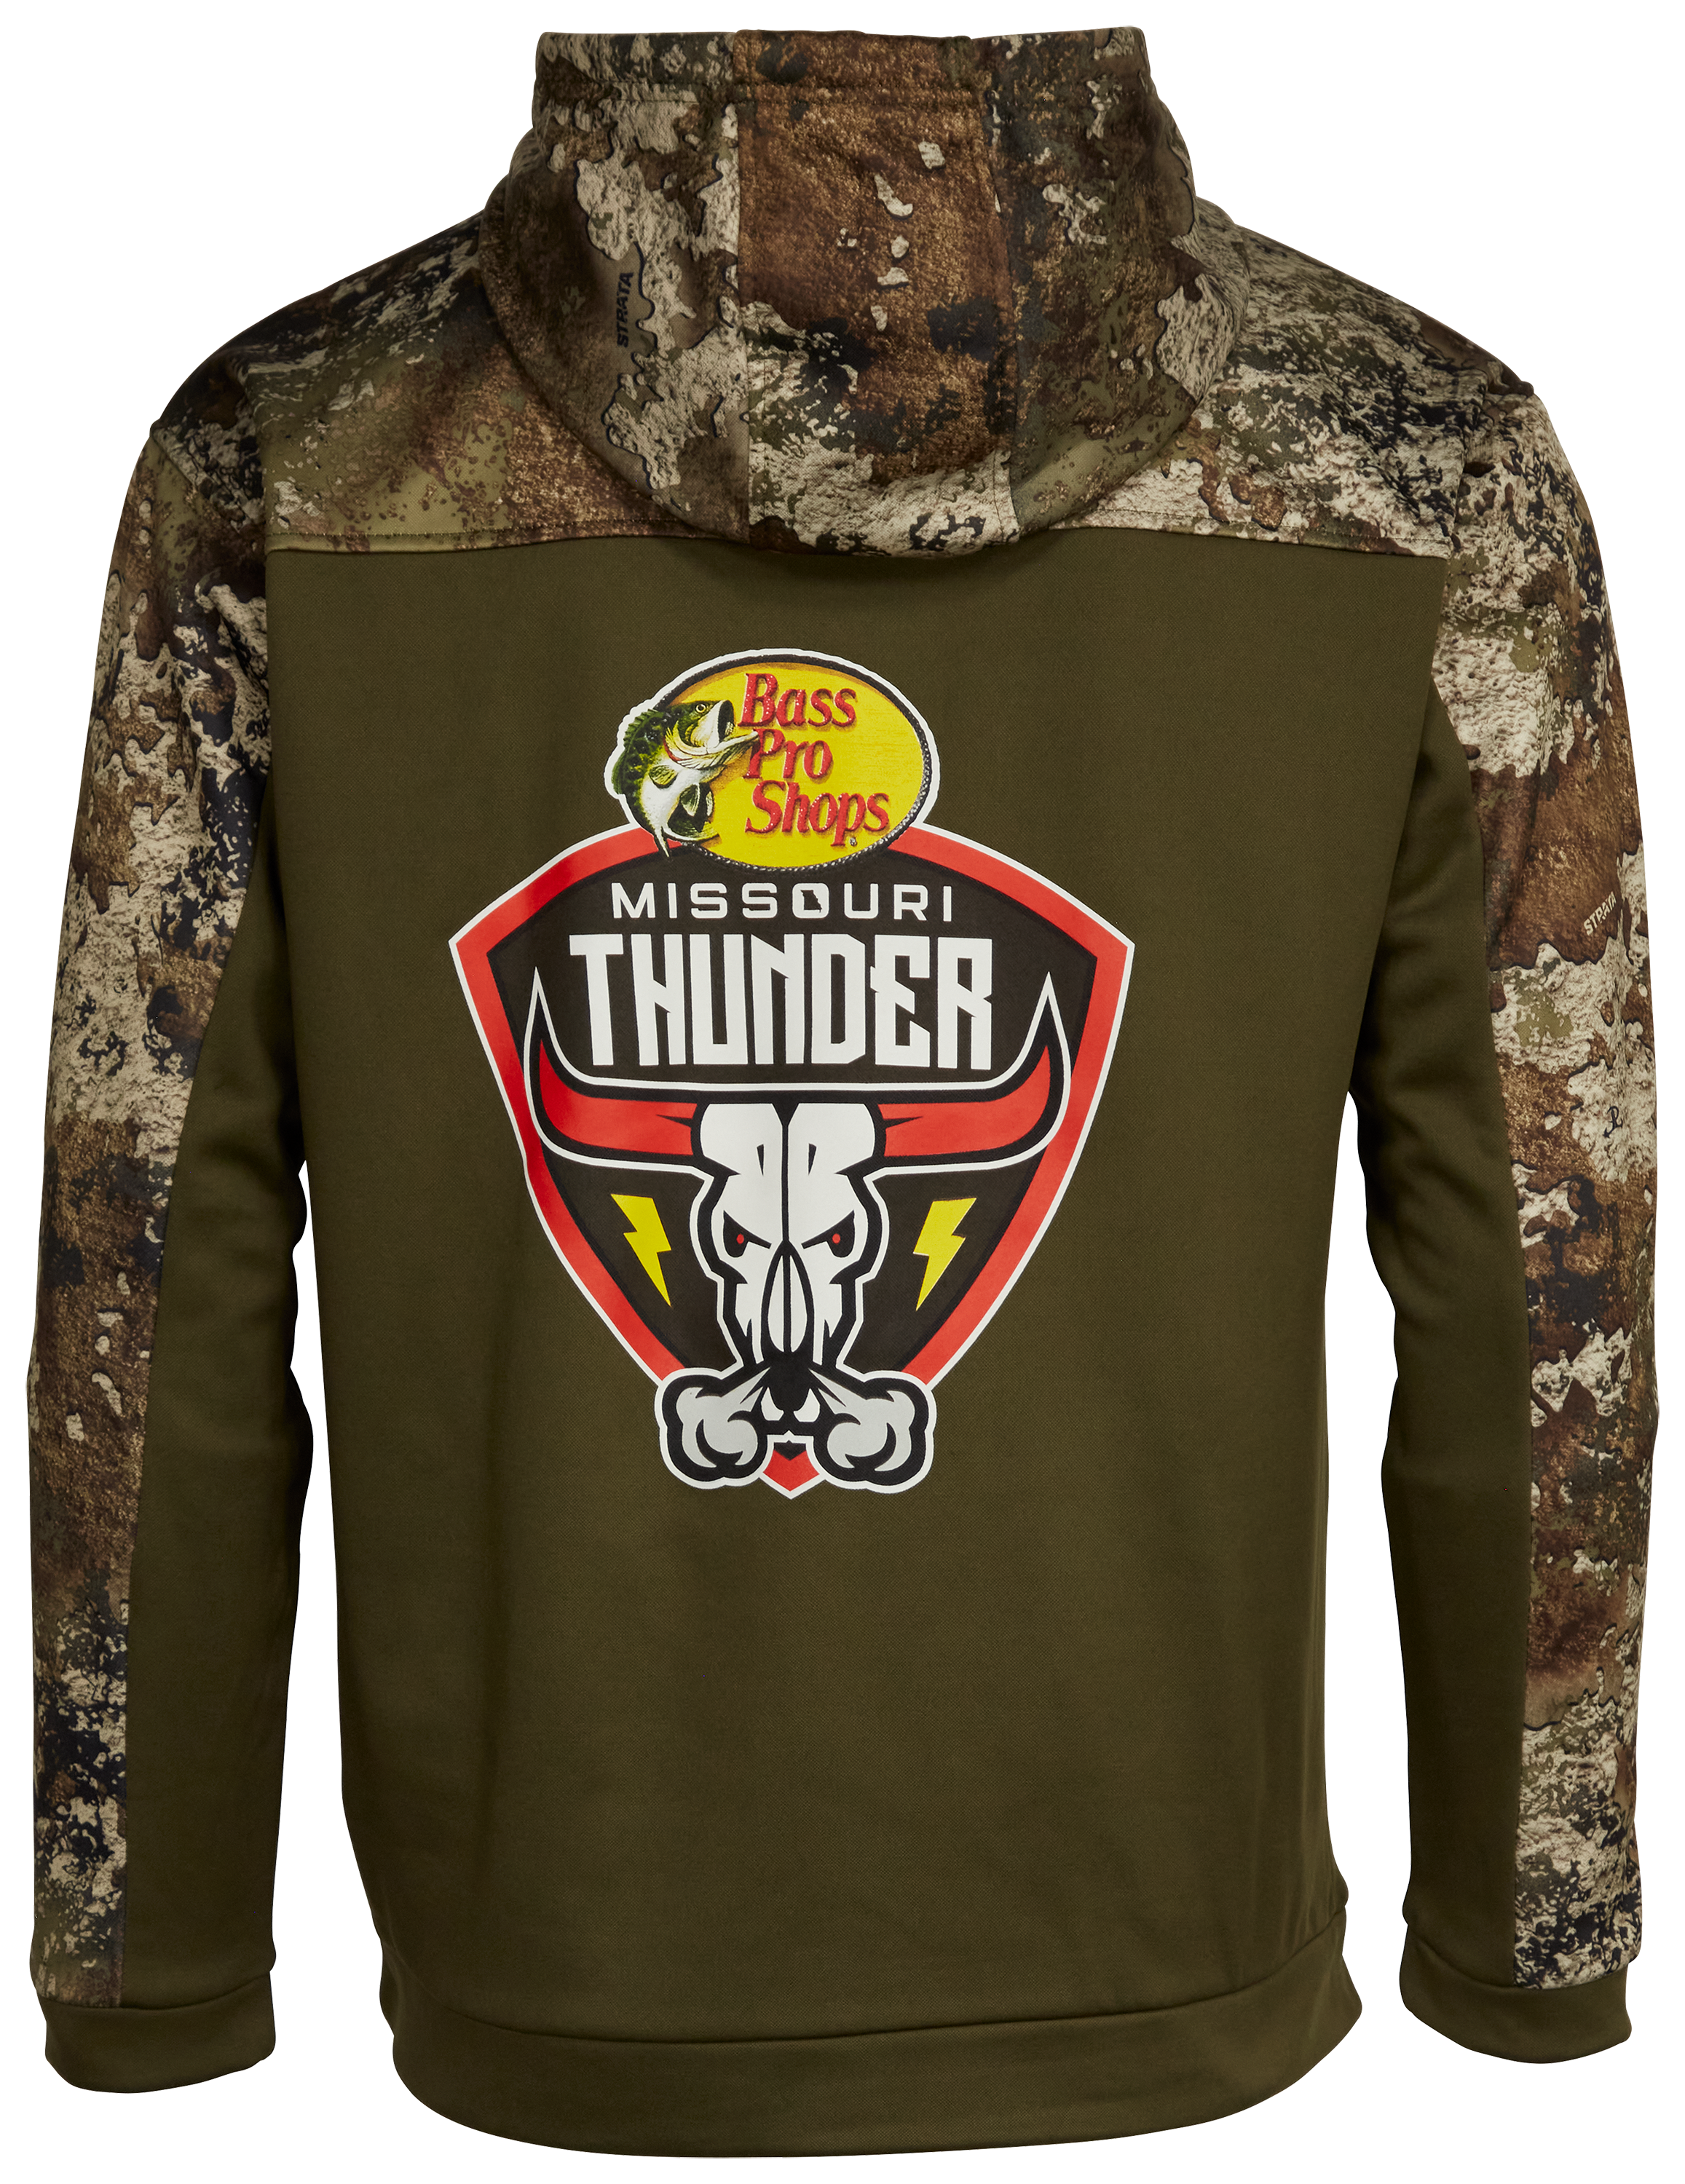 Bass Pro Shops Missouri Thunder Hoodie for Men - Olive/TrueTimber Strata - XL